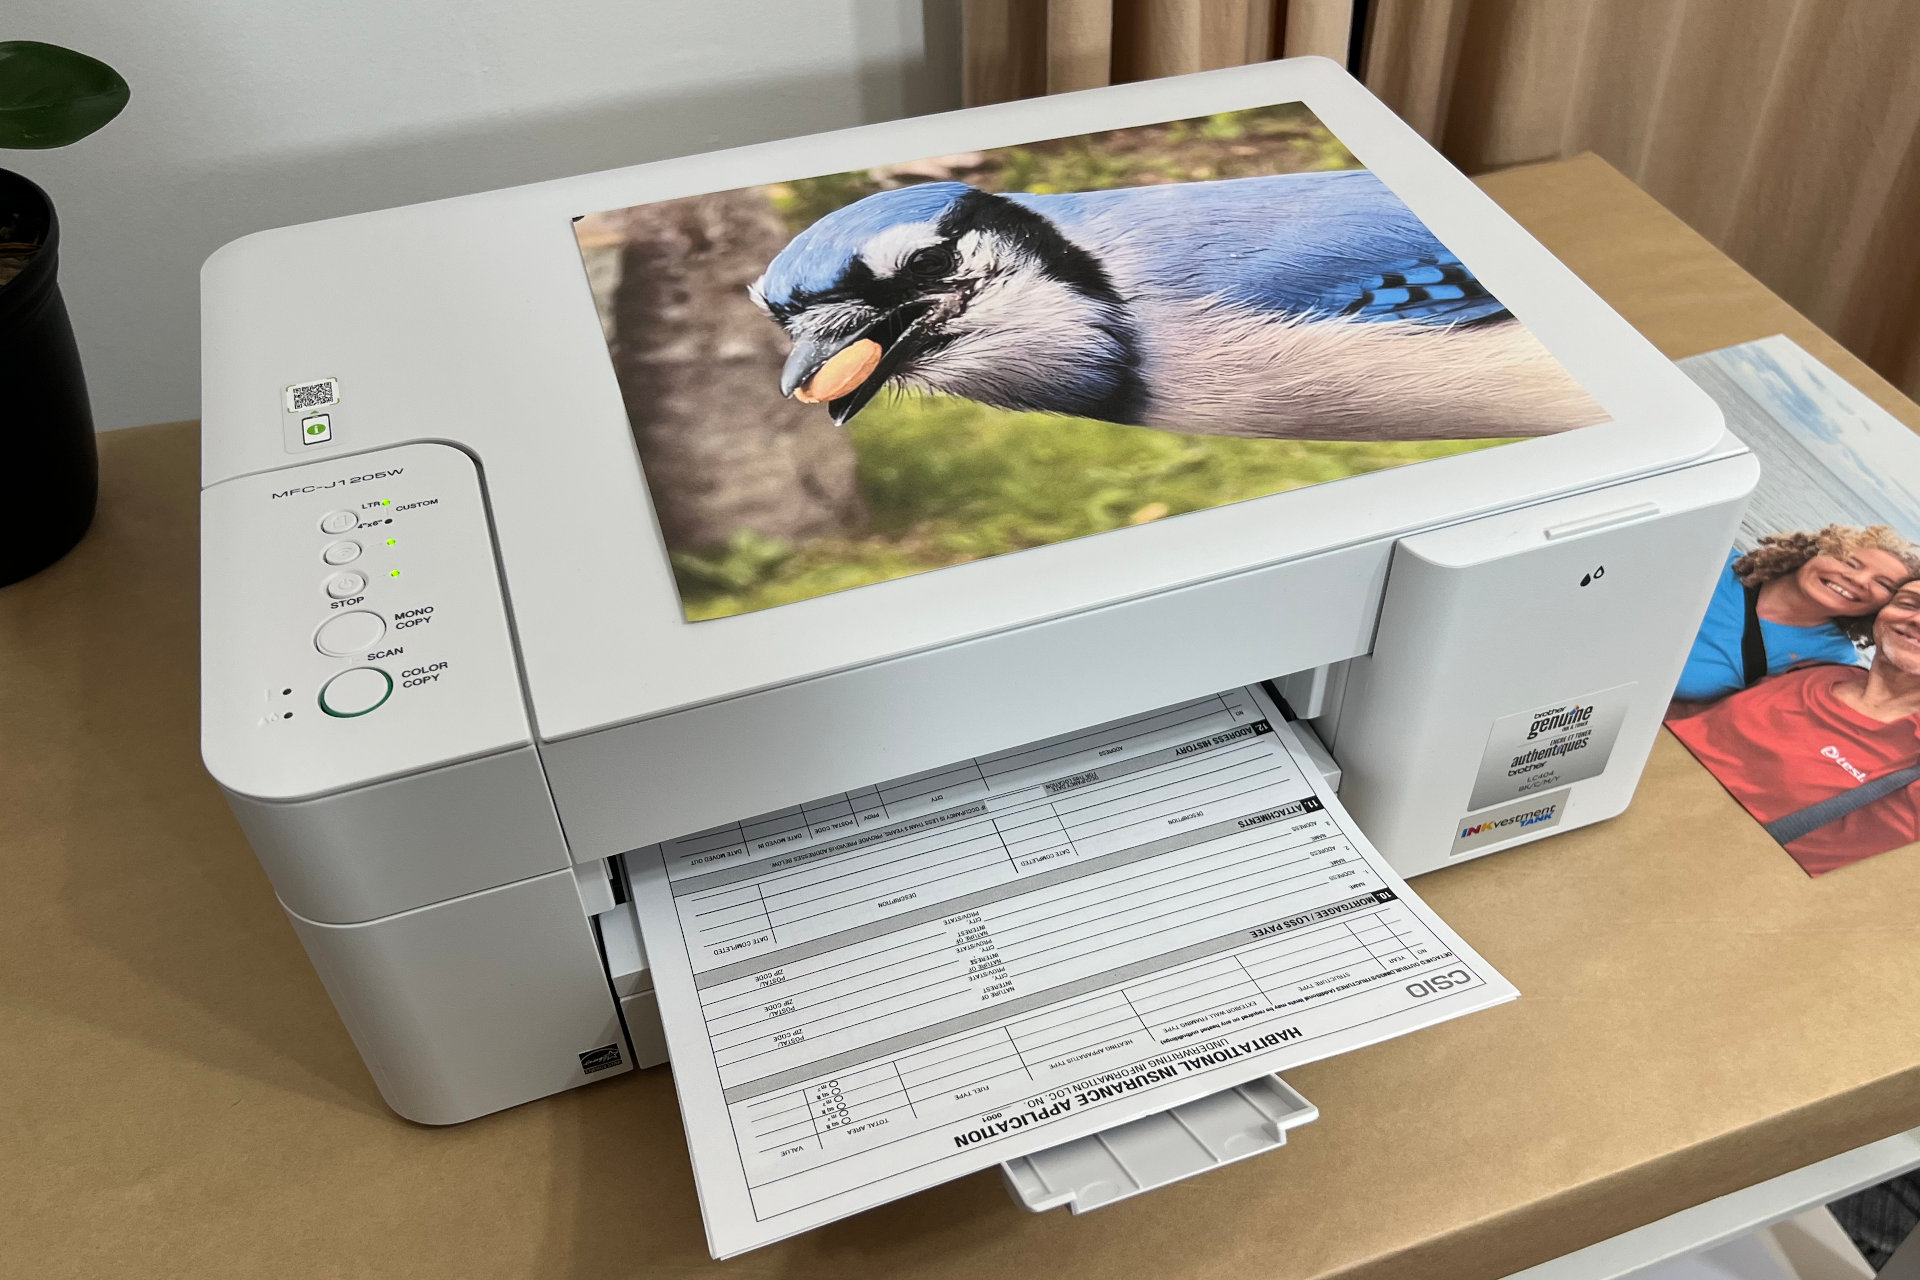 hp (Hewlett Packard) deskjet 420 printer